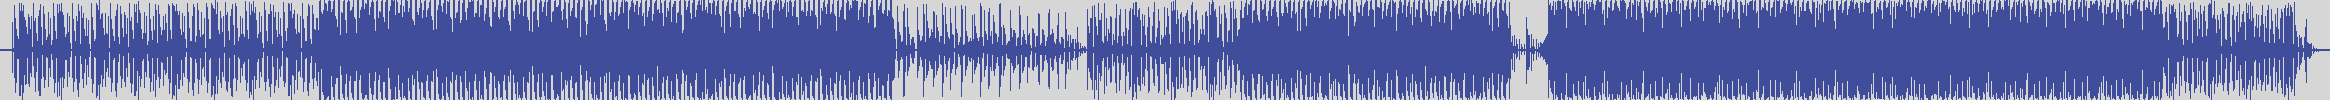 nf_boyz_records [NFY005] Robel Rezene - Highlighter [Margarita's Mix] audio wave form